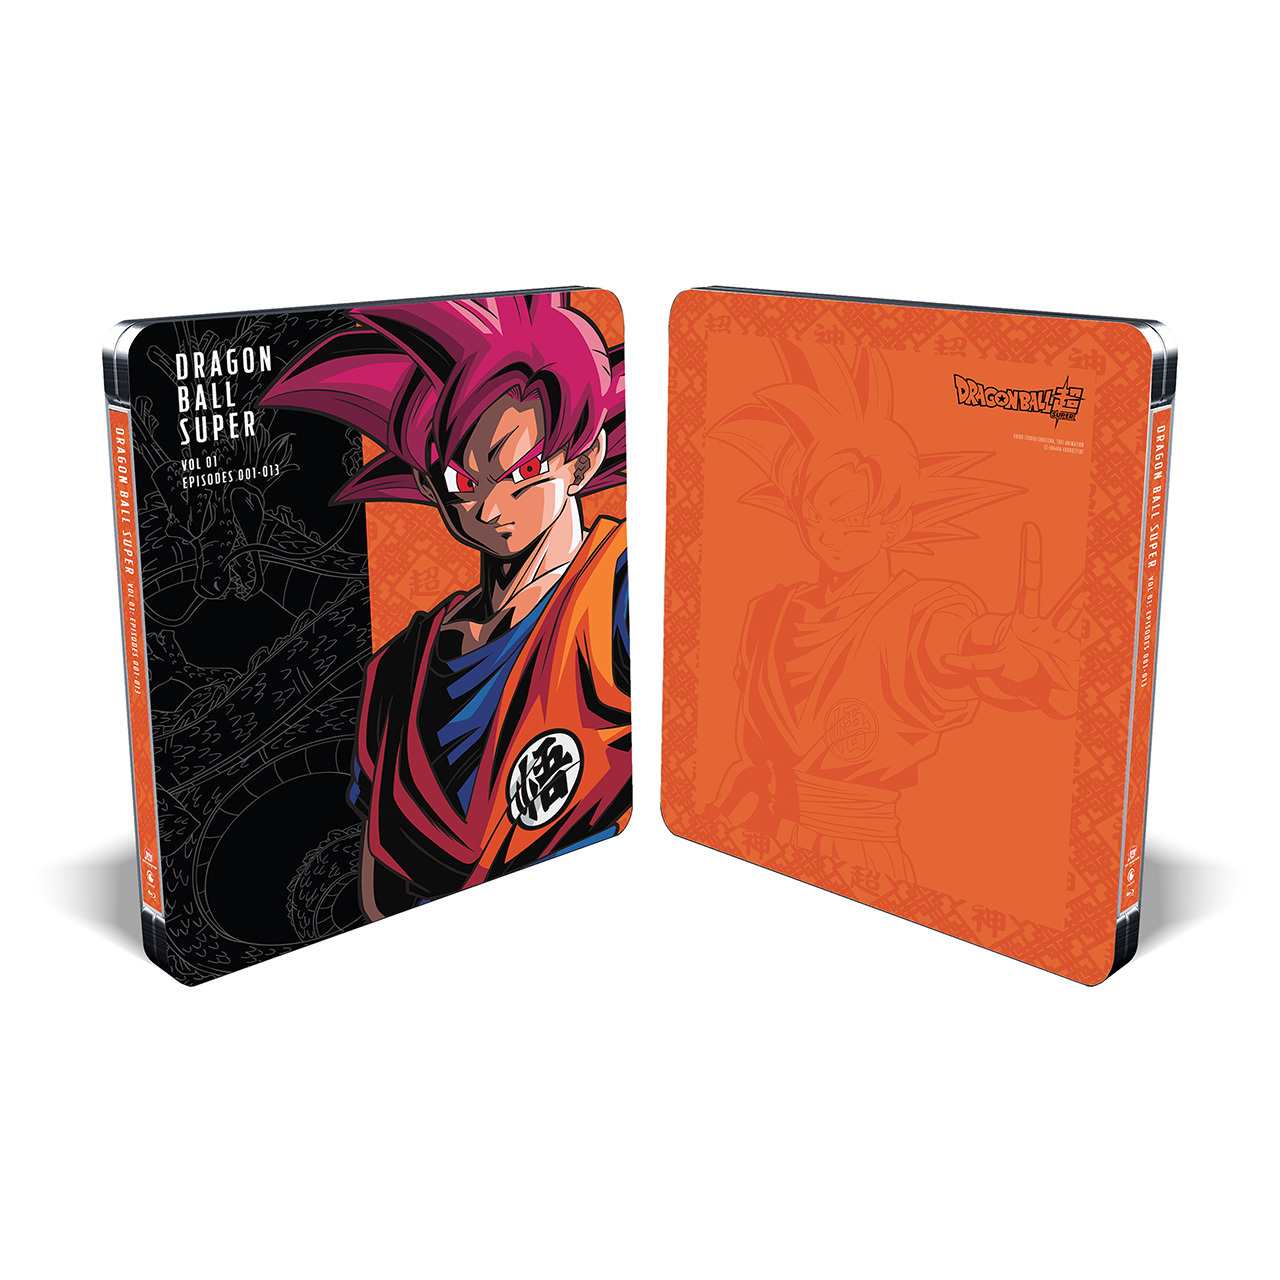 Dragon Ball Super Super Hero 4K ULTRA HD Blu-ray+Blu-ray+Steelbook+Box NEW